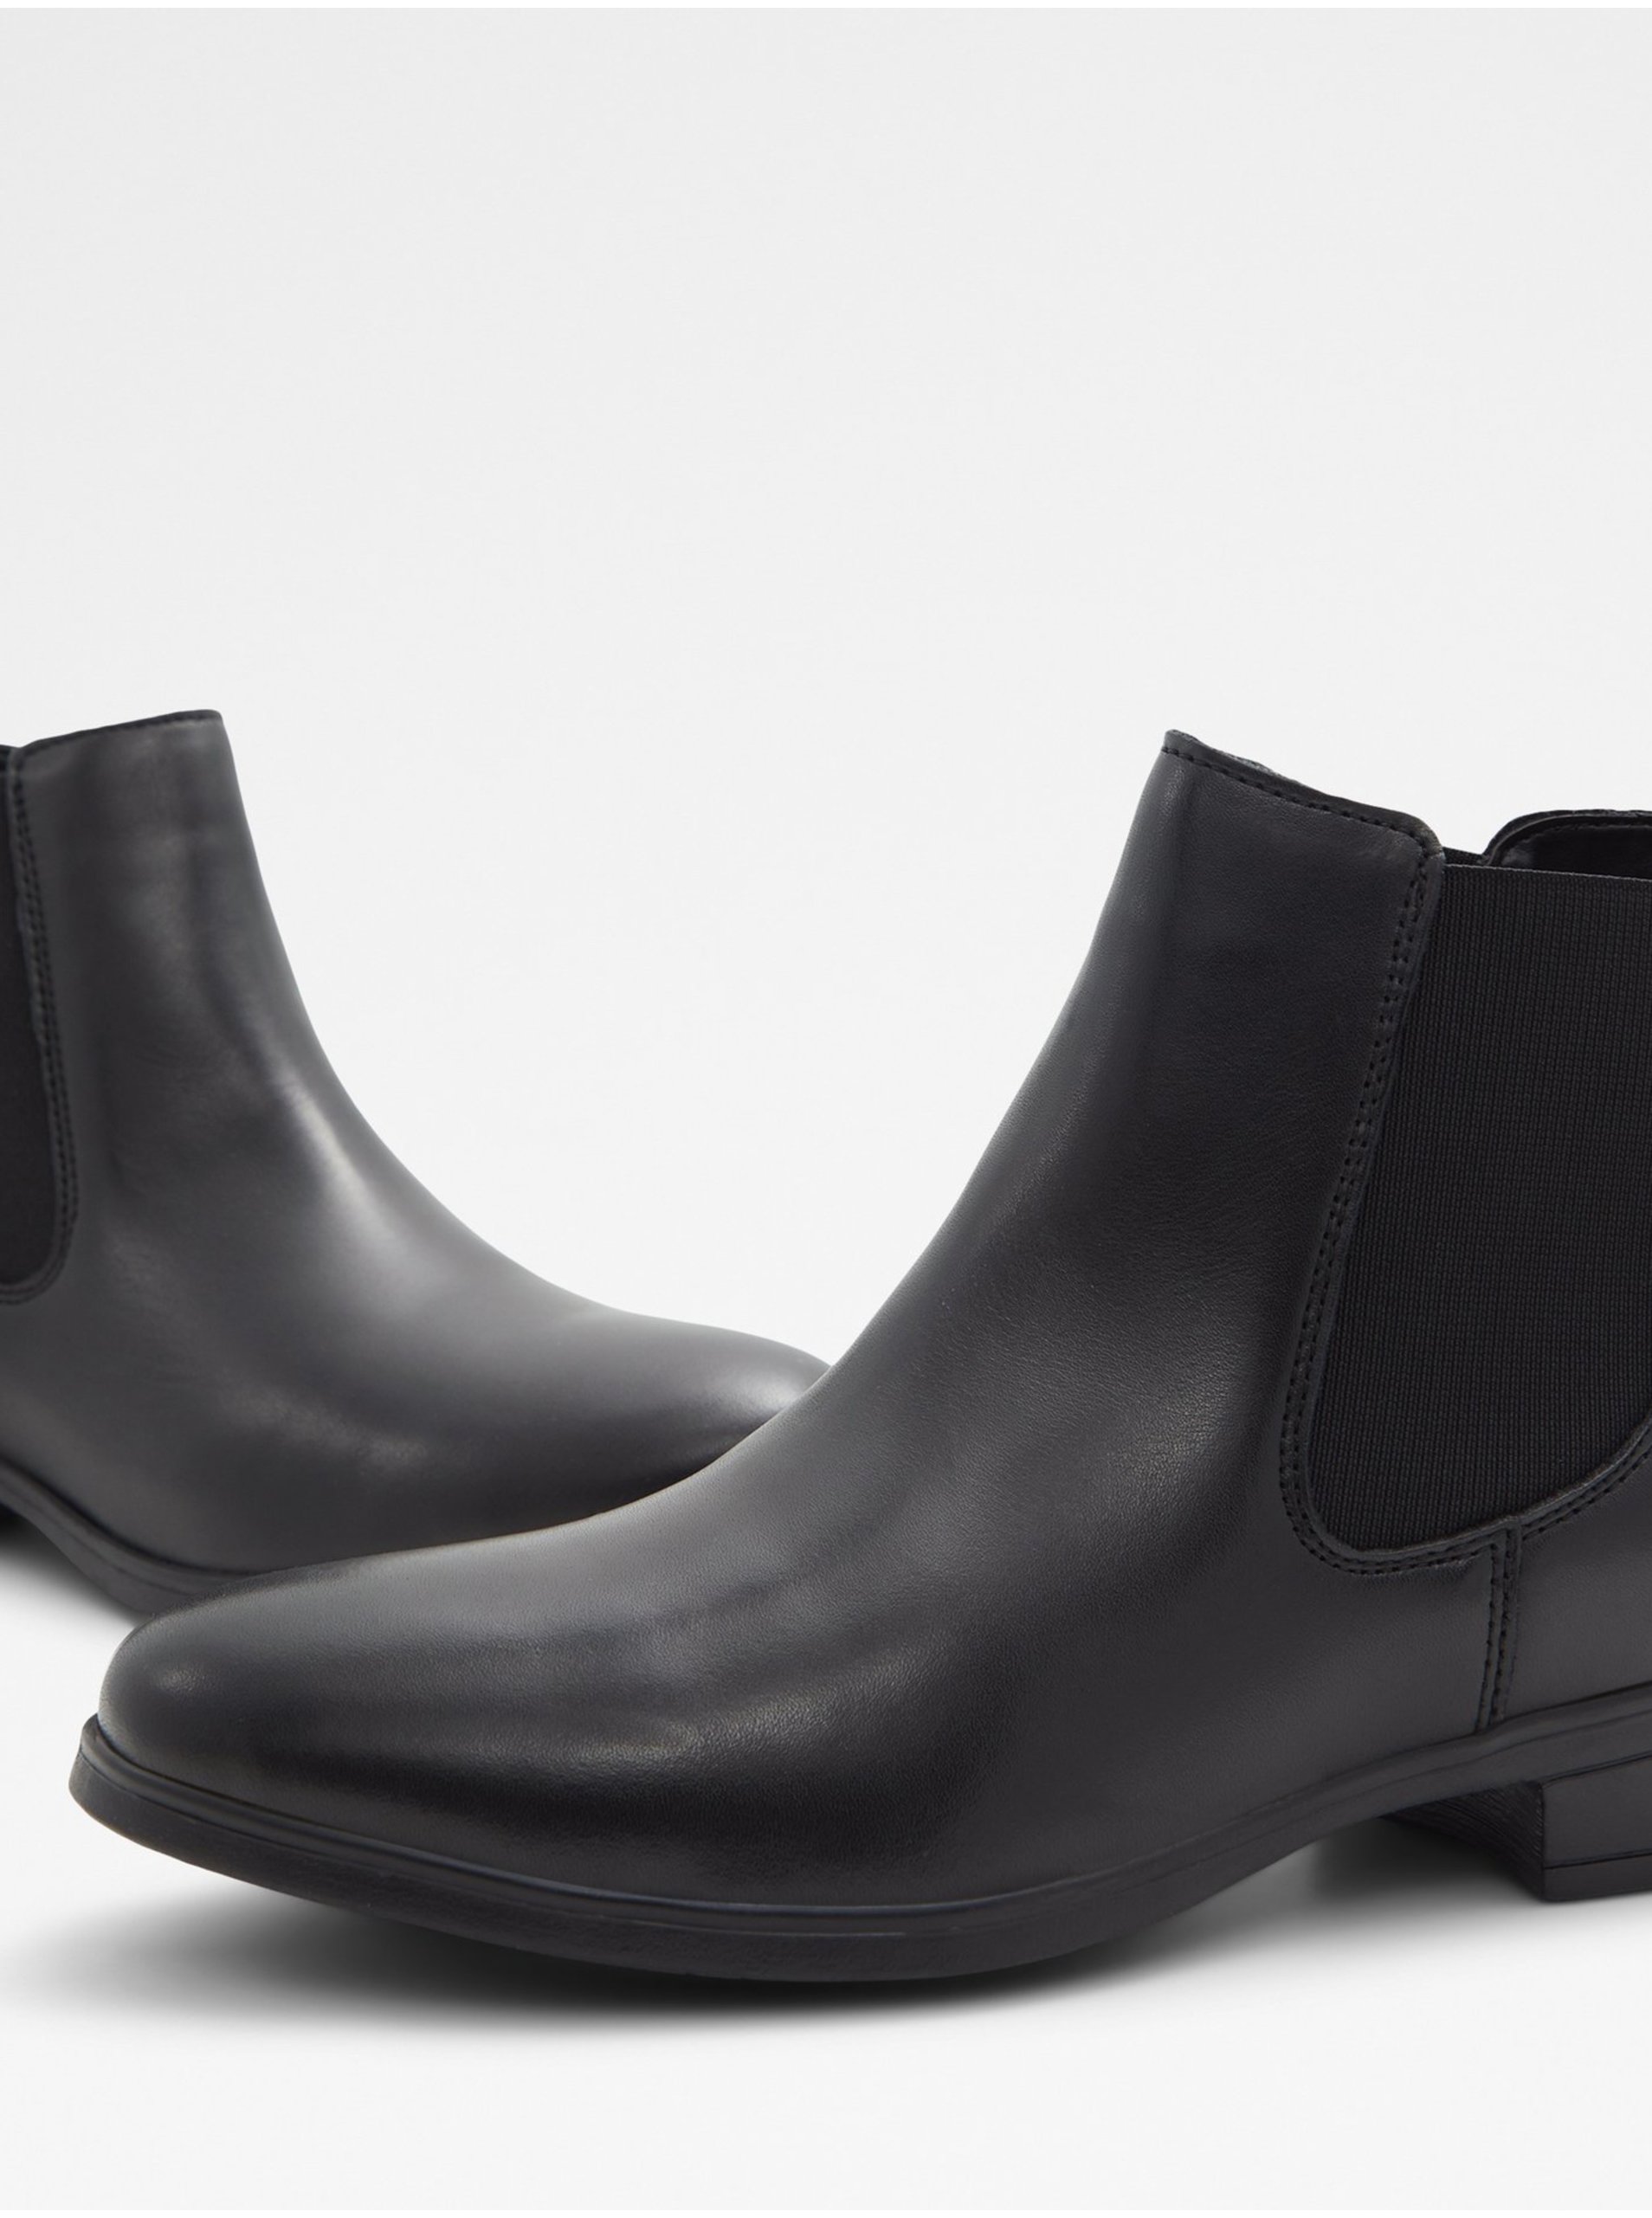 Černé dámské kožené kotníkové boty ALDO Wicoeni